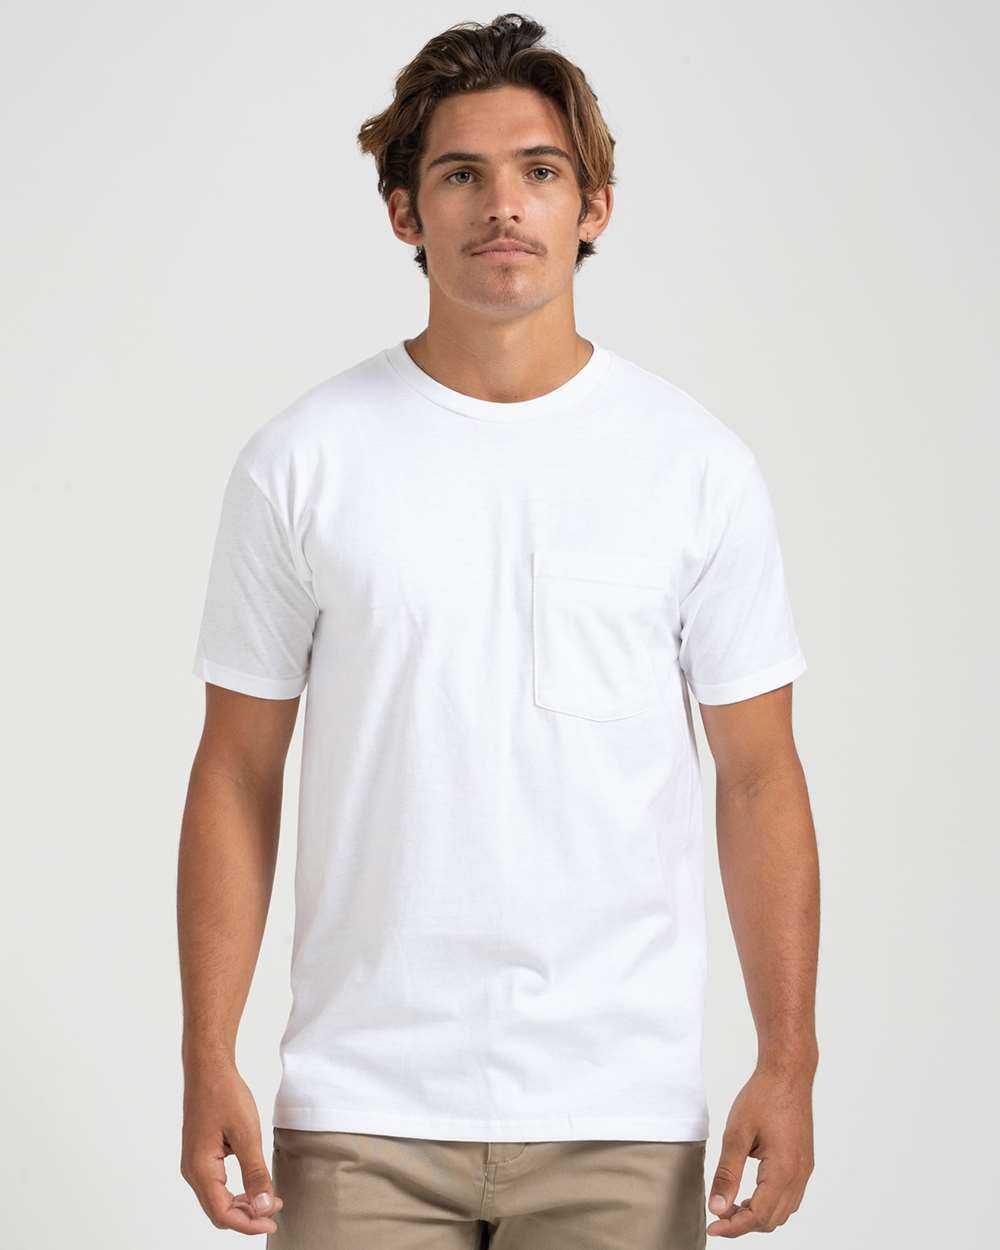 Tultex 293 Unisex Heavyweight Pocket T-Shirt - White - HIT a Double